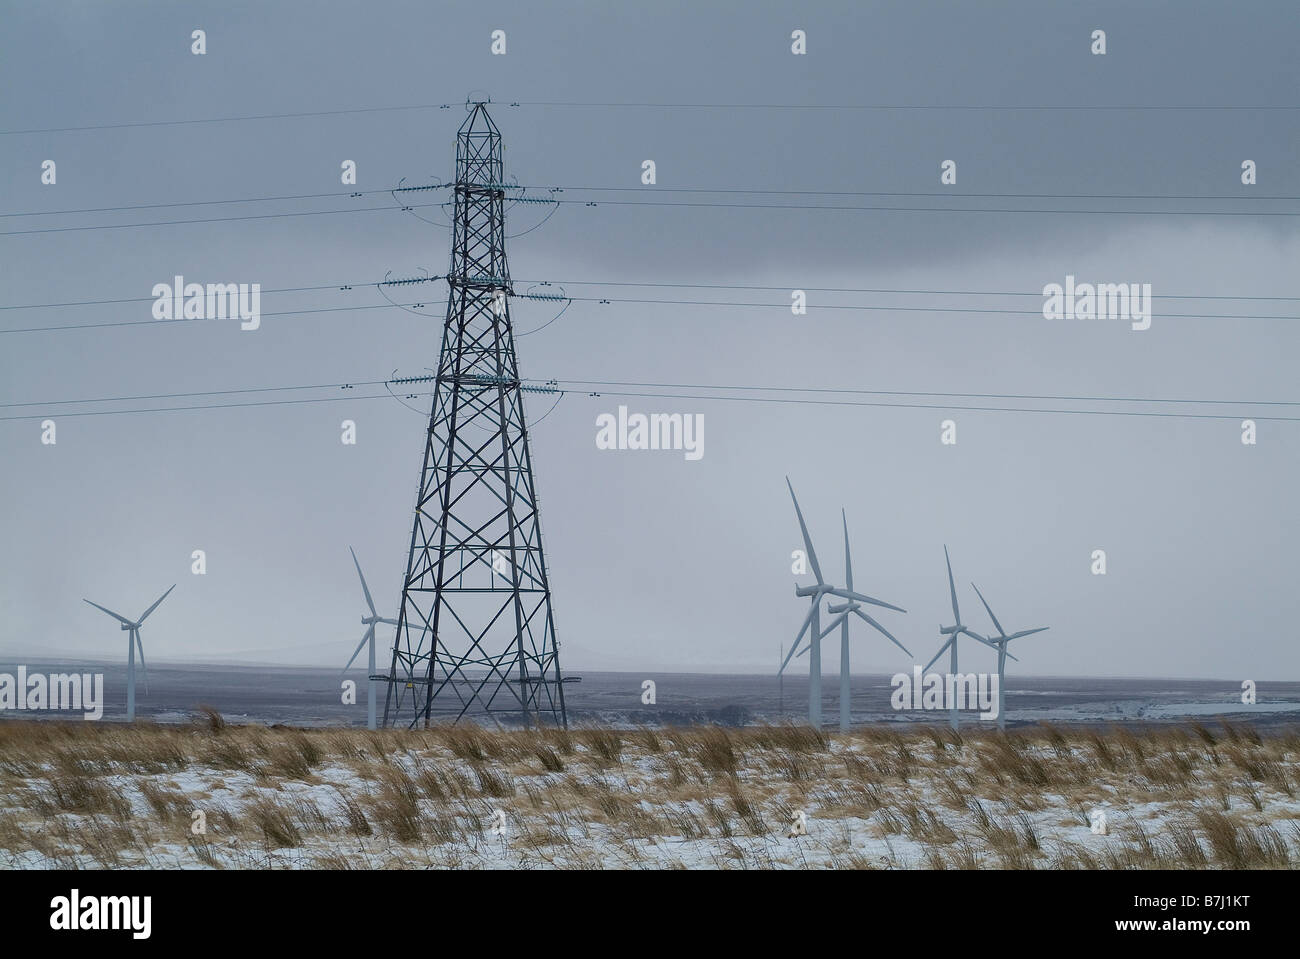 dh Causeymire Wind Farm NPOWER CAITHNESS Scotland Power Lines whiy Moorland vent turbine pylon royaume-uni écoulement pays hiver Banque D'Images